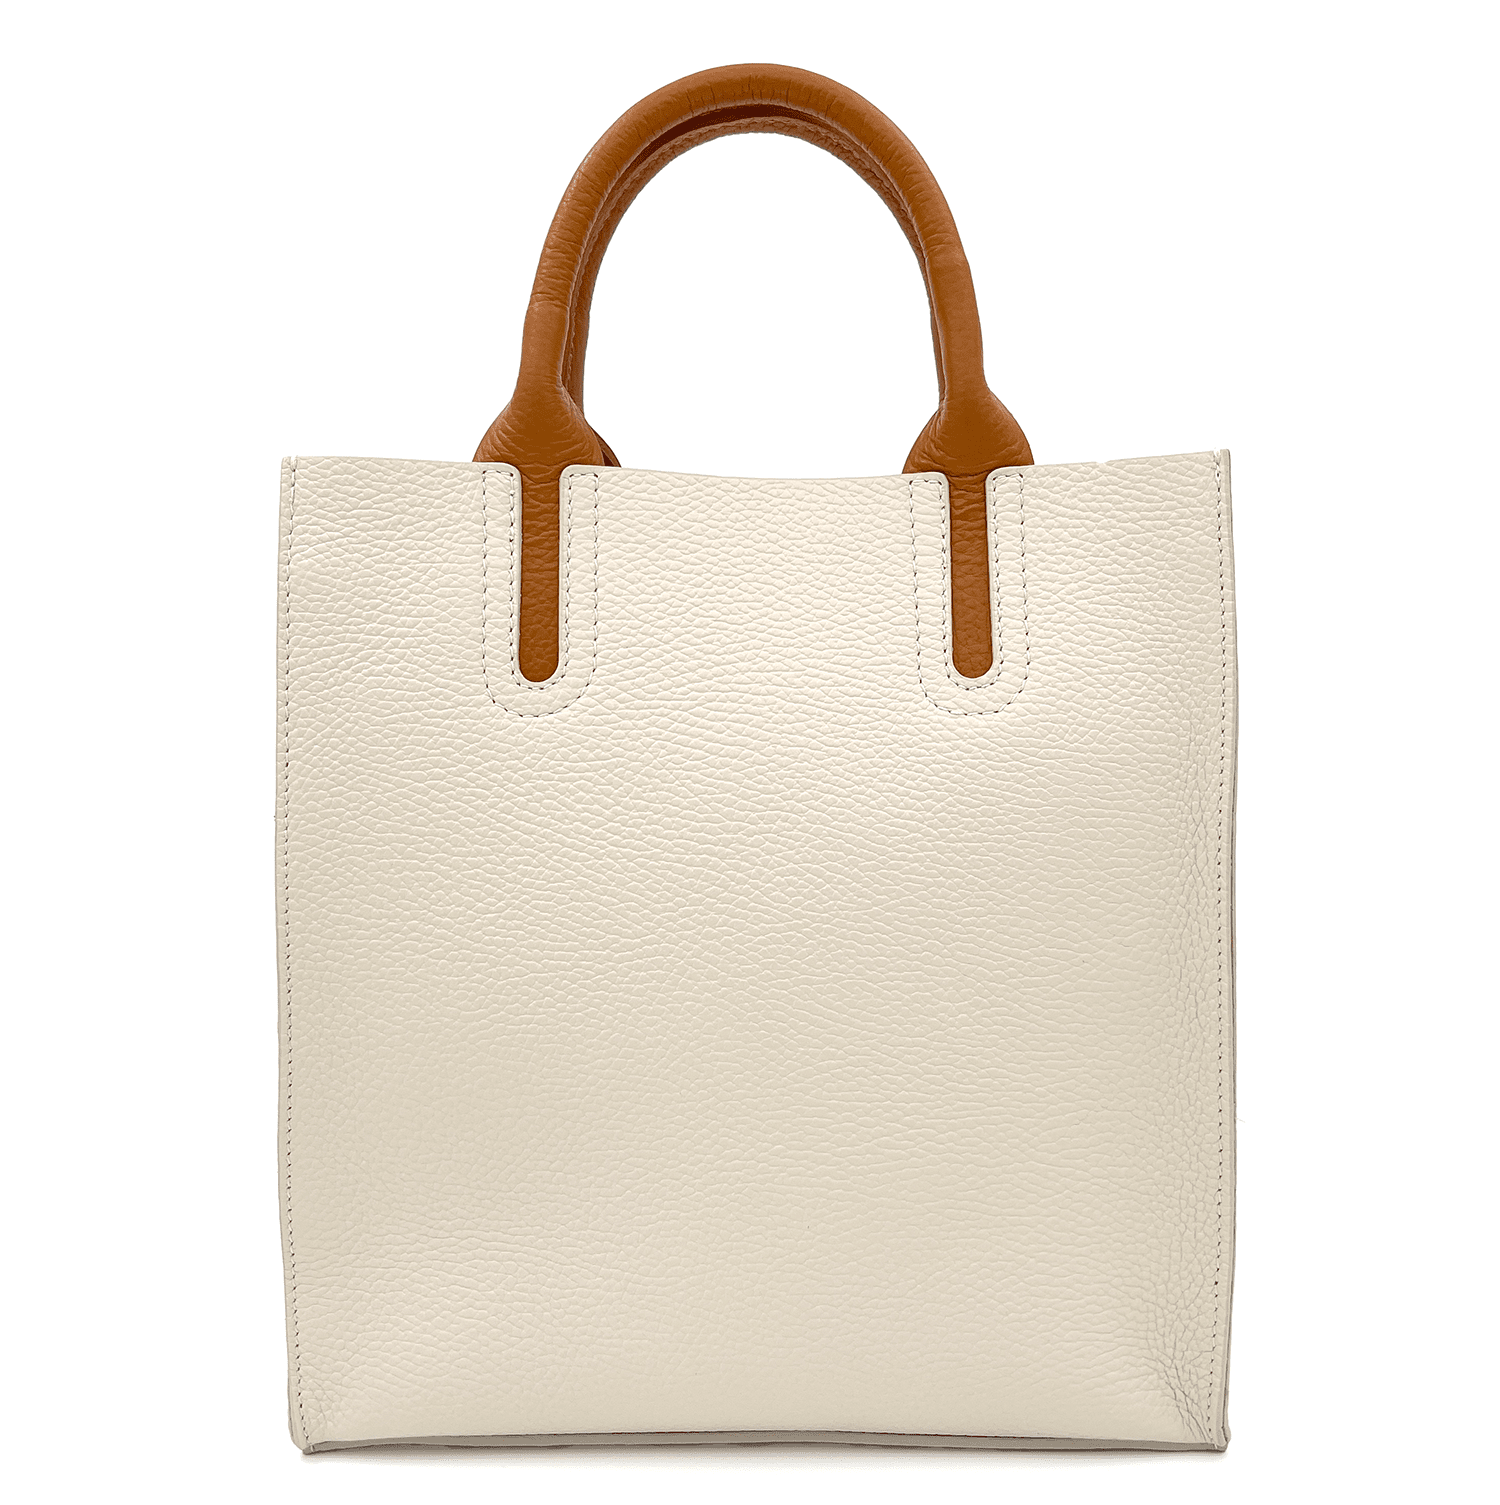 Дамска чанта от естествена кожа Florentina - бежово/керемидено кафяво